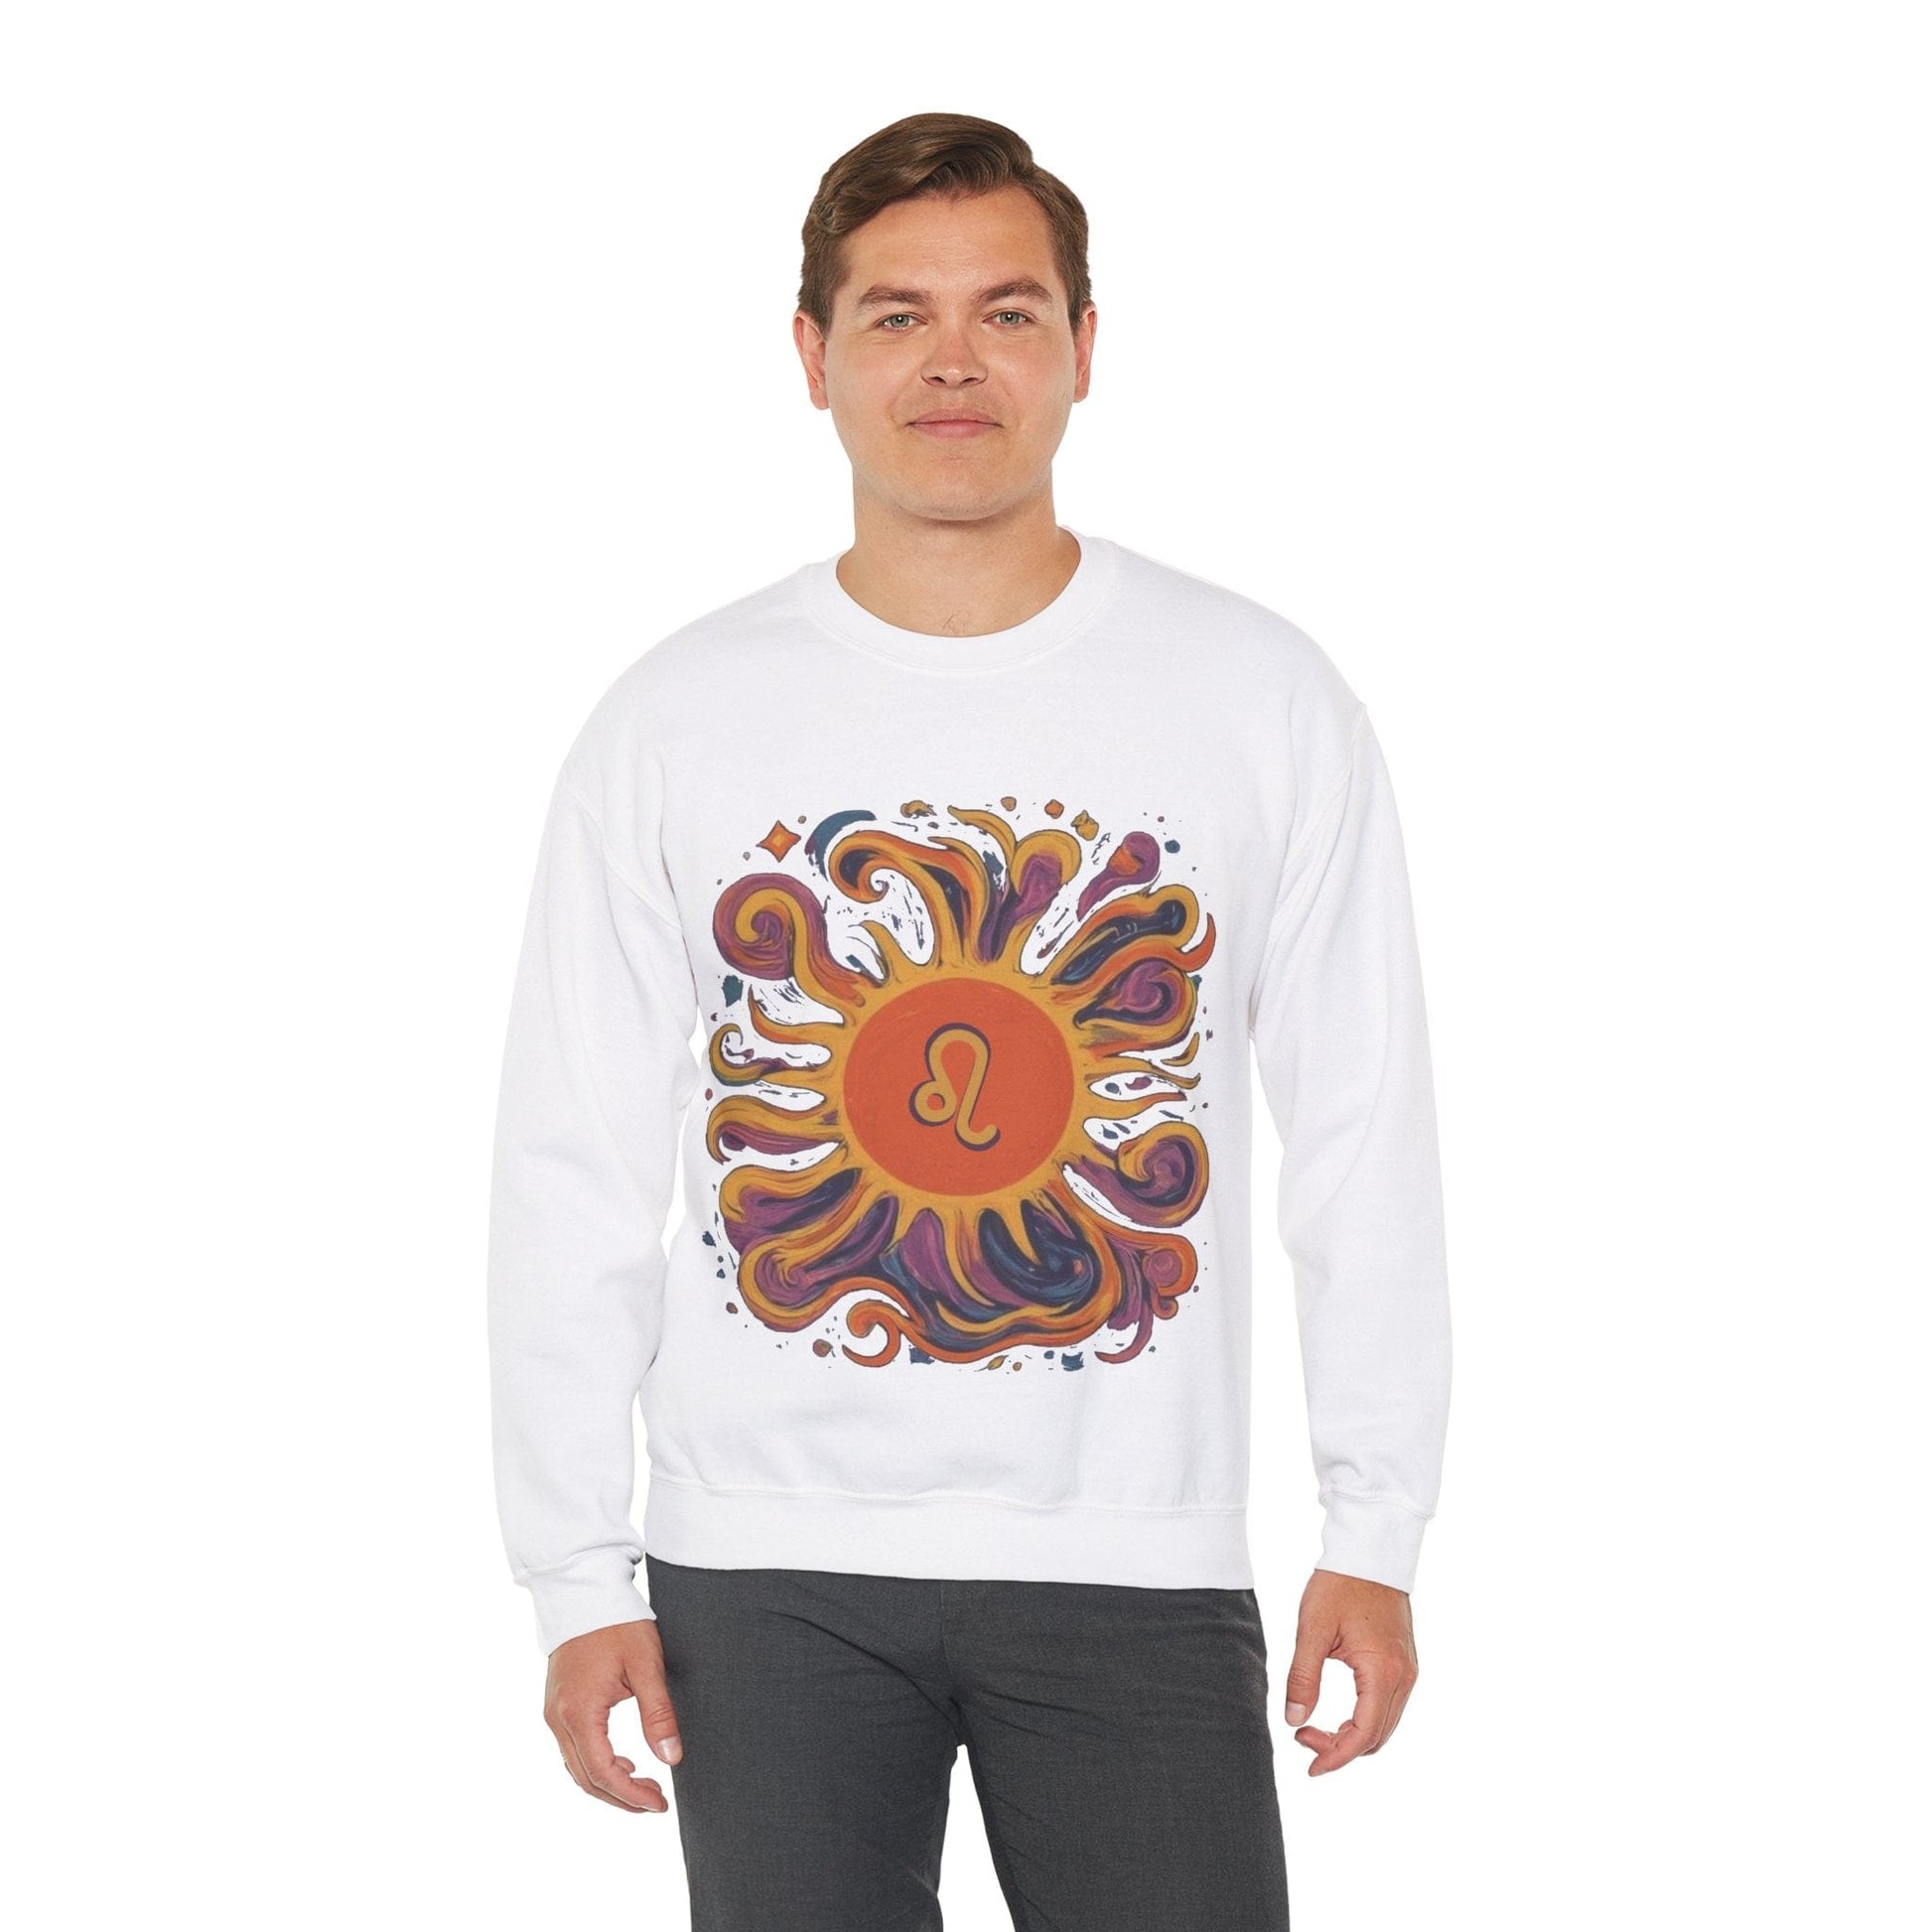 Sweatshirt Leo Majestic Sun Soft Sweater: Royal Warmth for the Lion's Heart